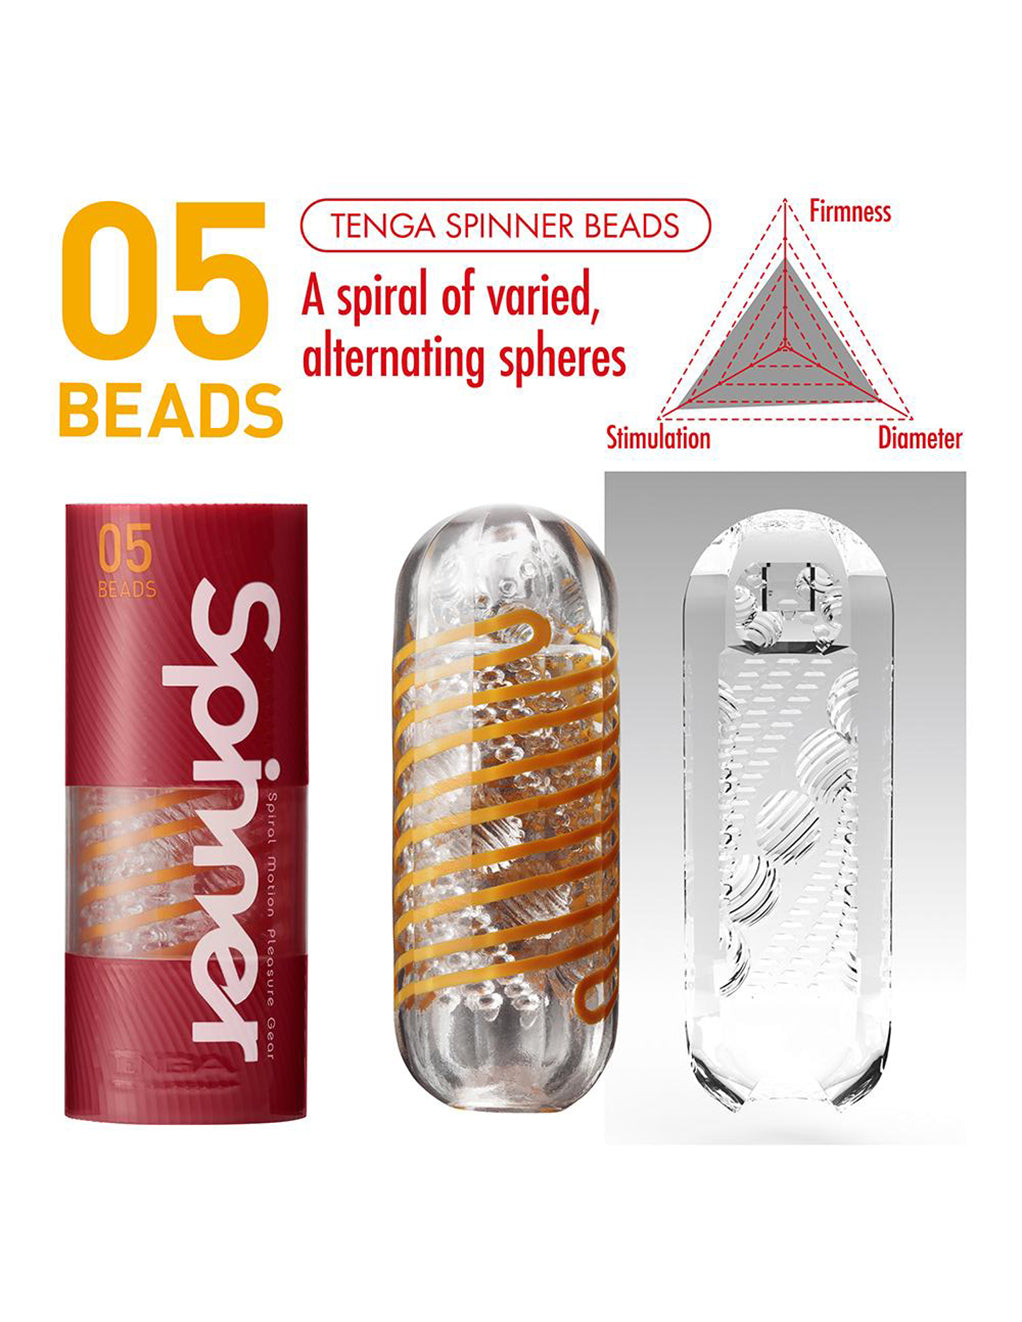 Tenga Spinner Beads- Firmness Diagram